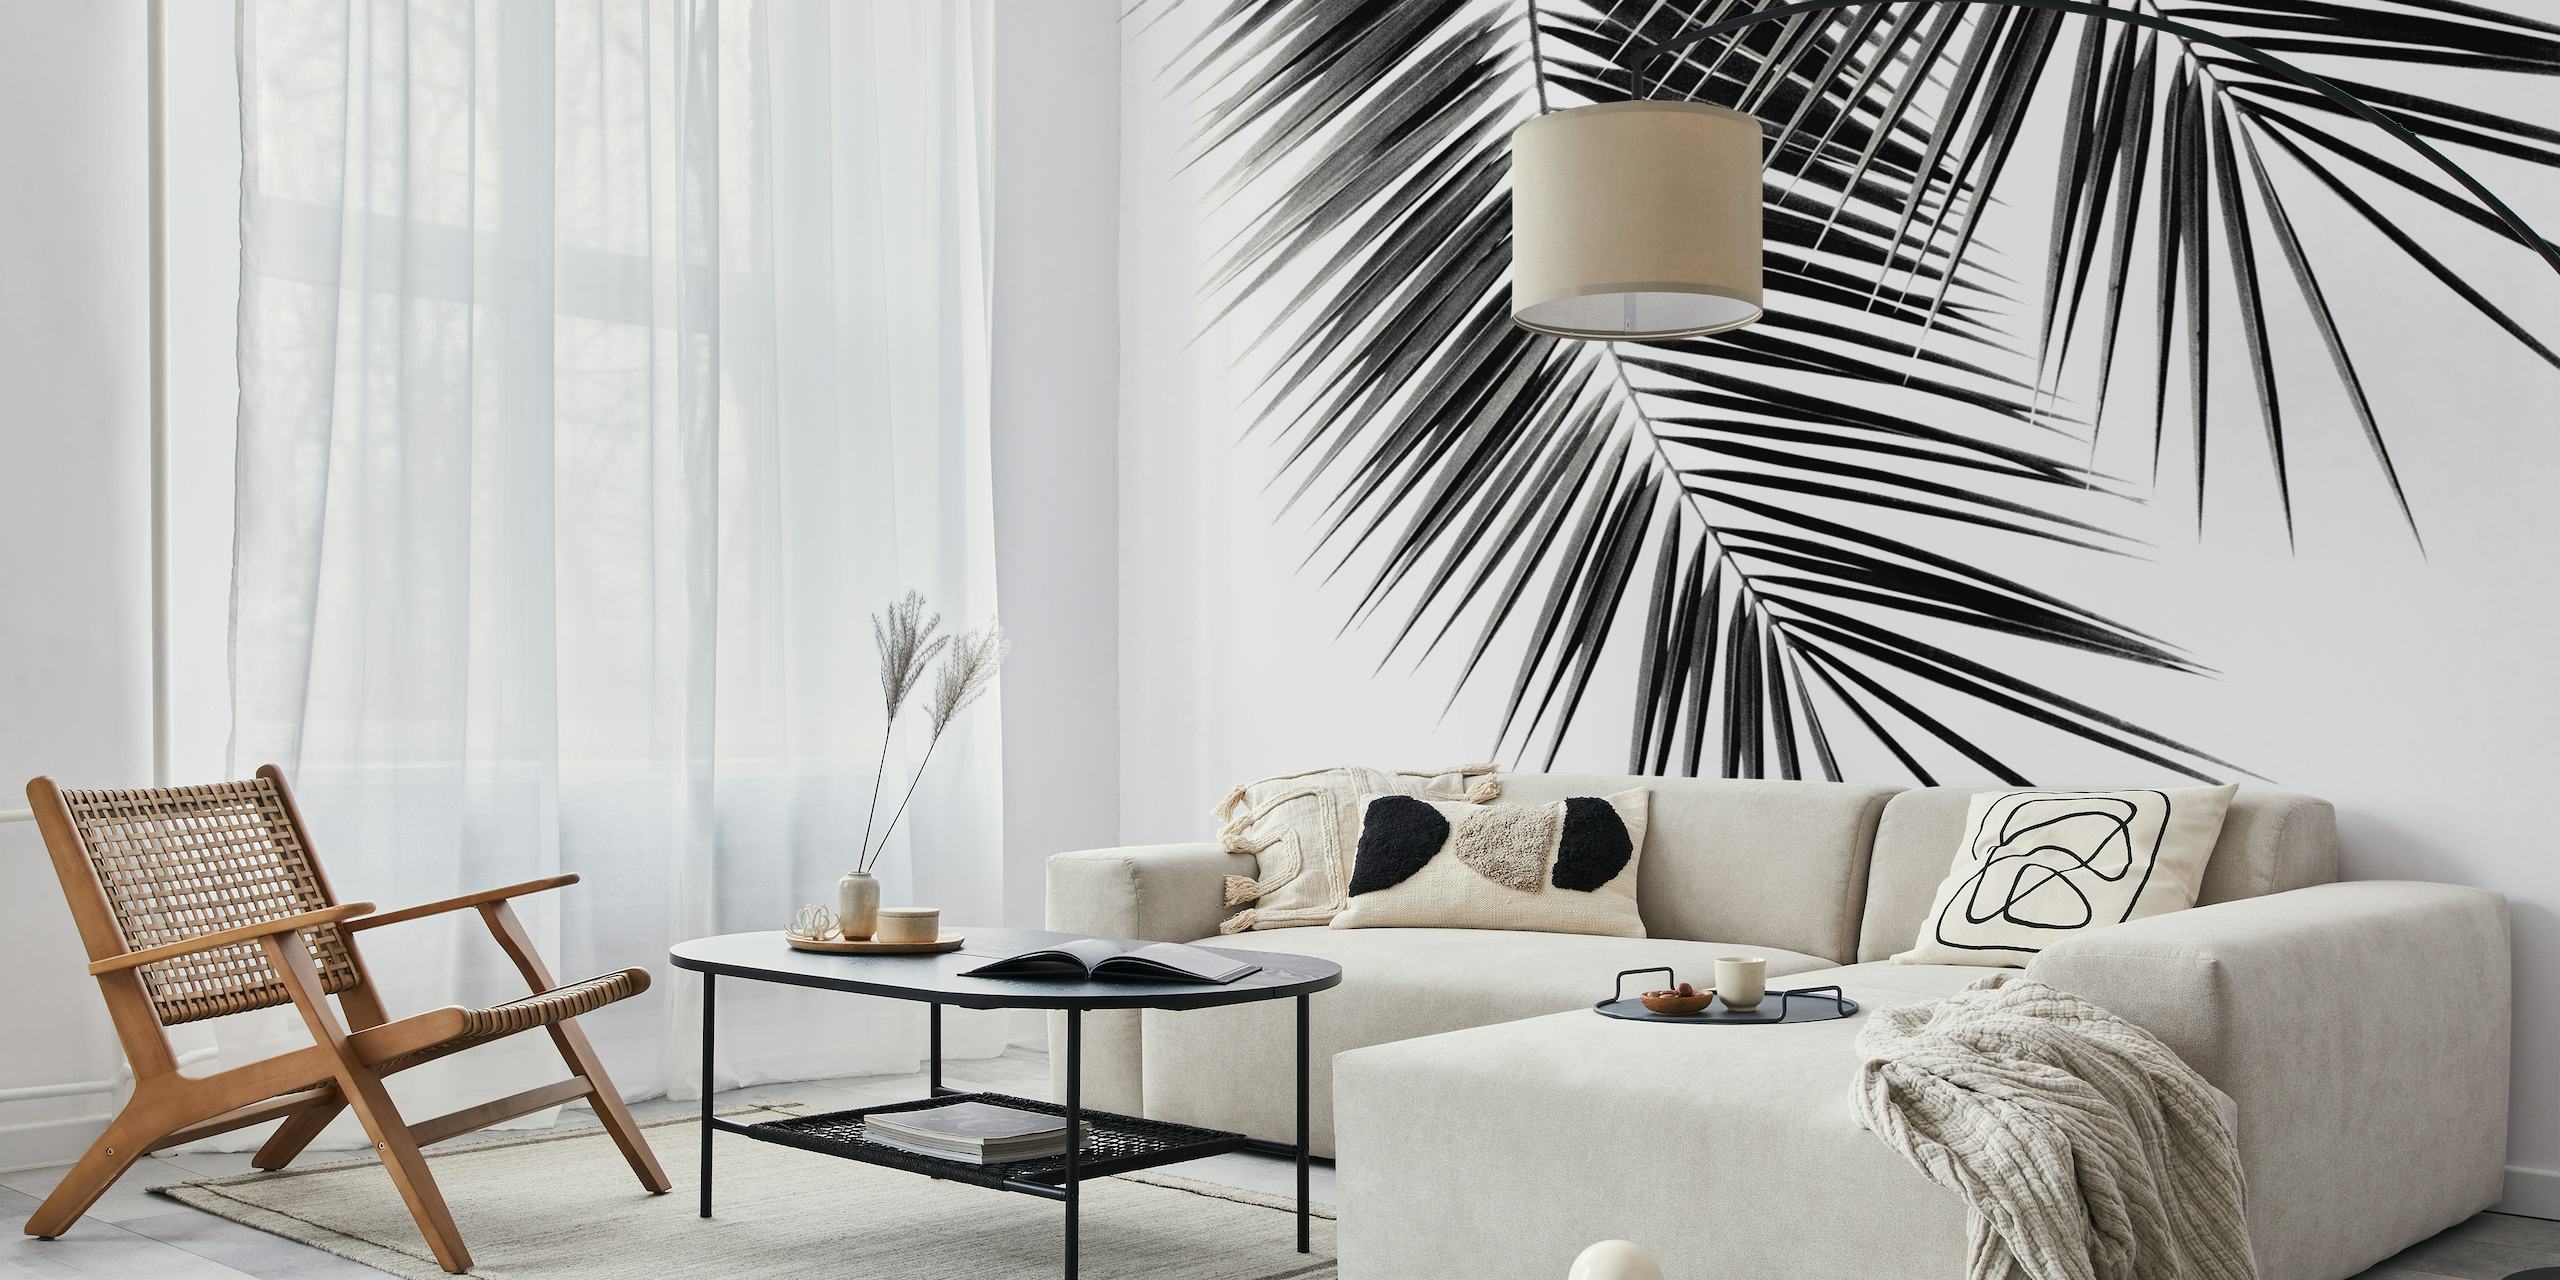 Fotomural de hojas de palma negras monocromáticas para un diseño interior contemporáneo